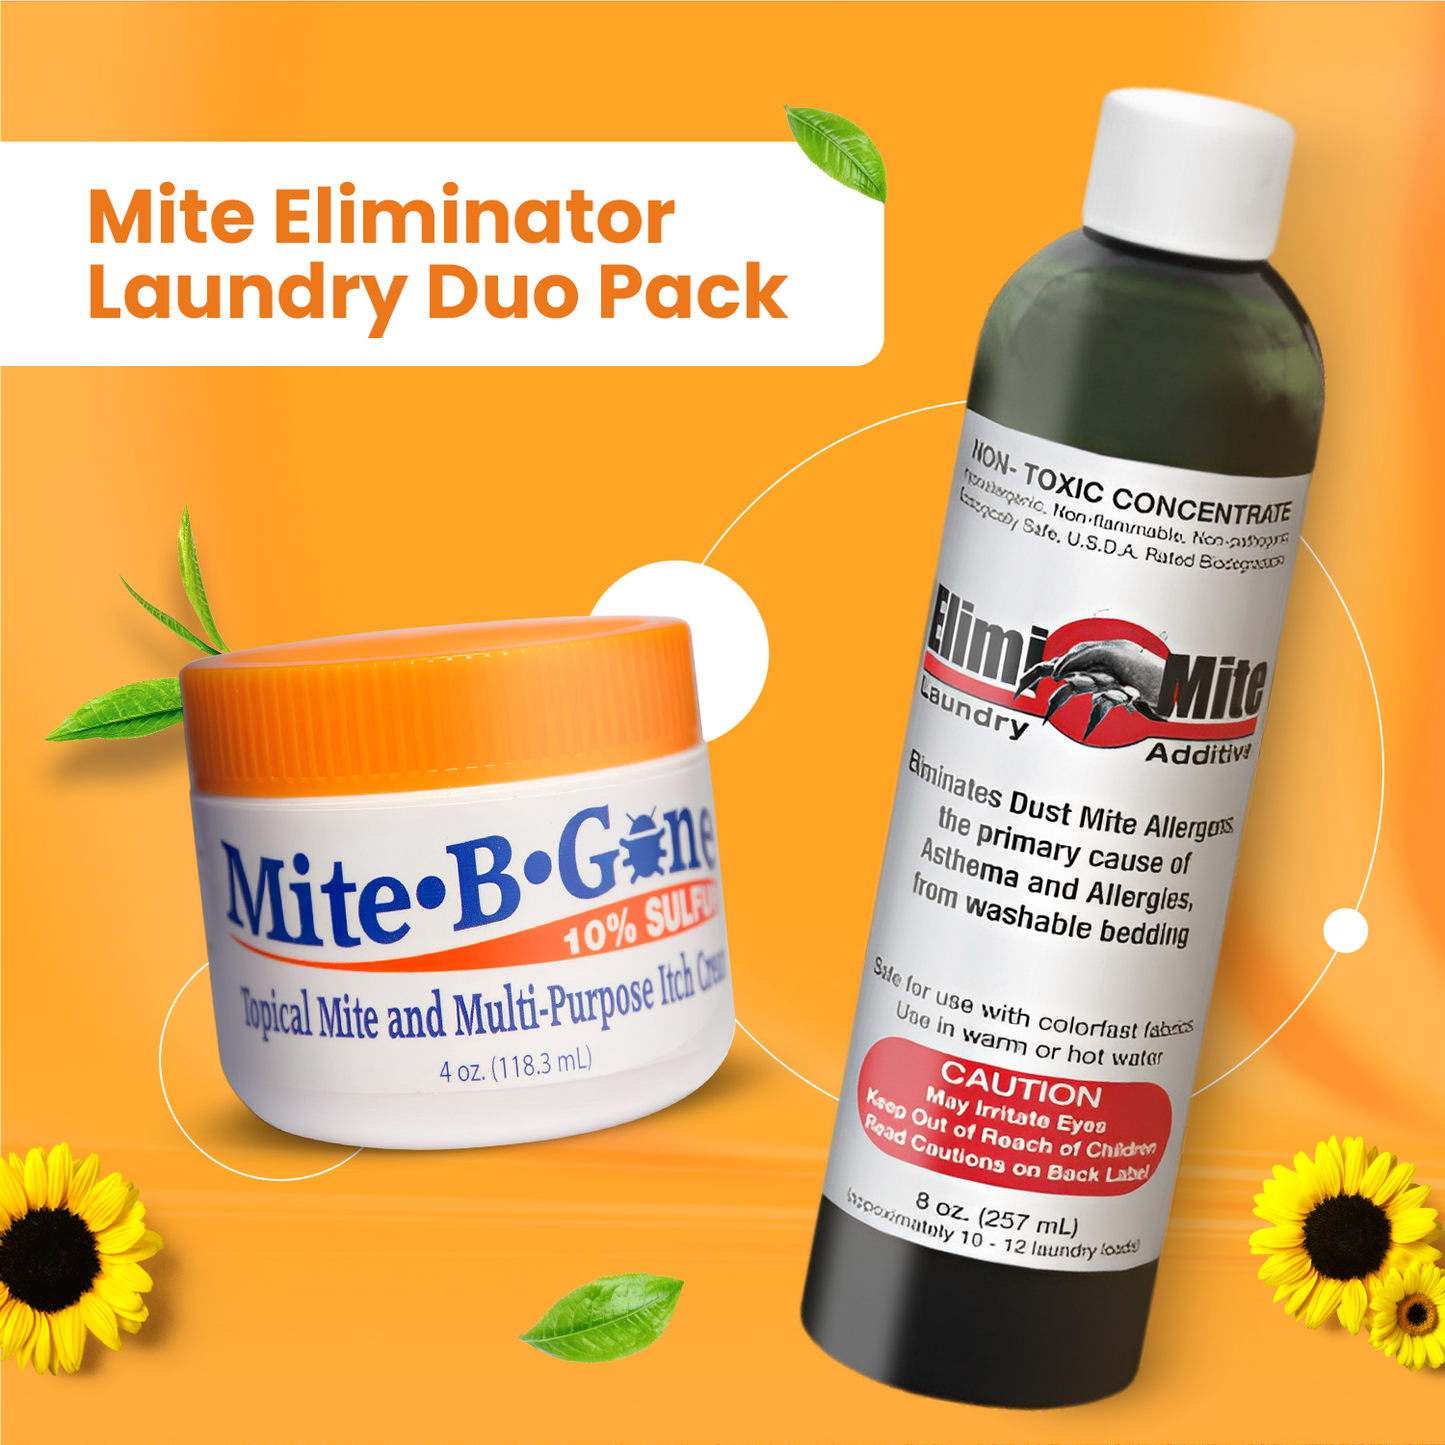 Minibini Mrs002-us Odor Eliminator Refill, Lemon Verbena, 2-Pack